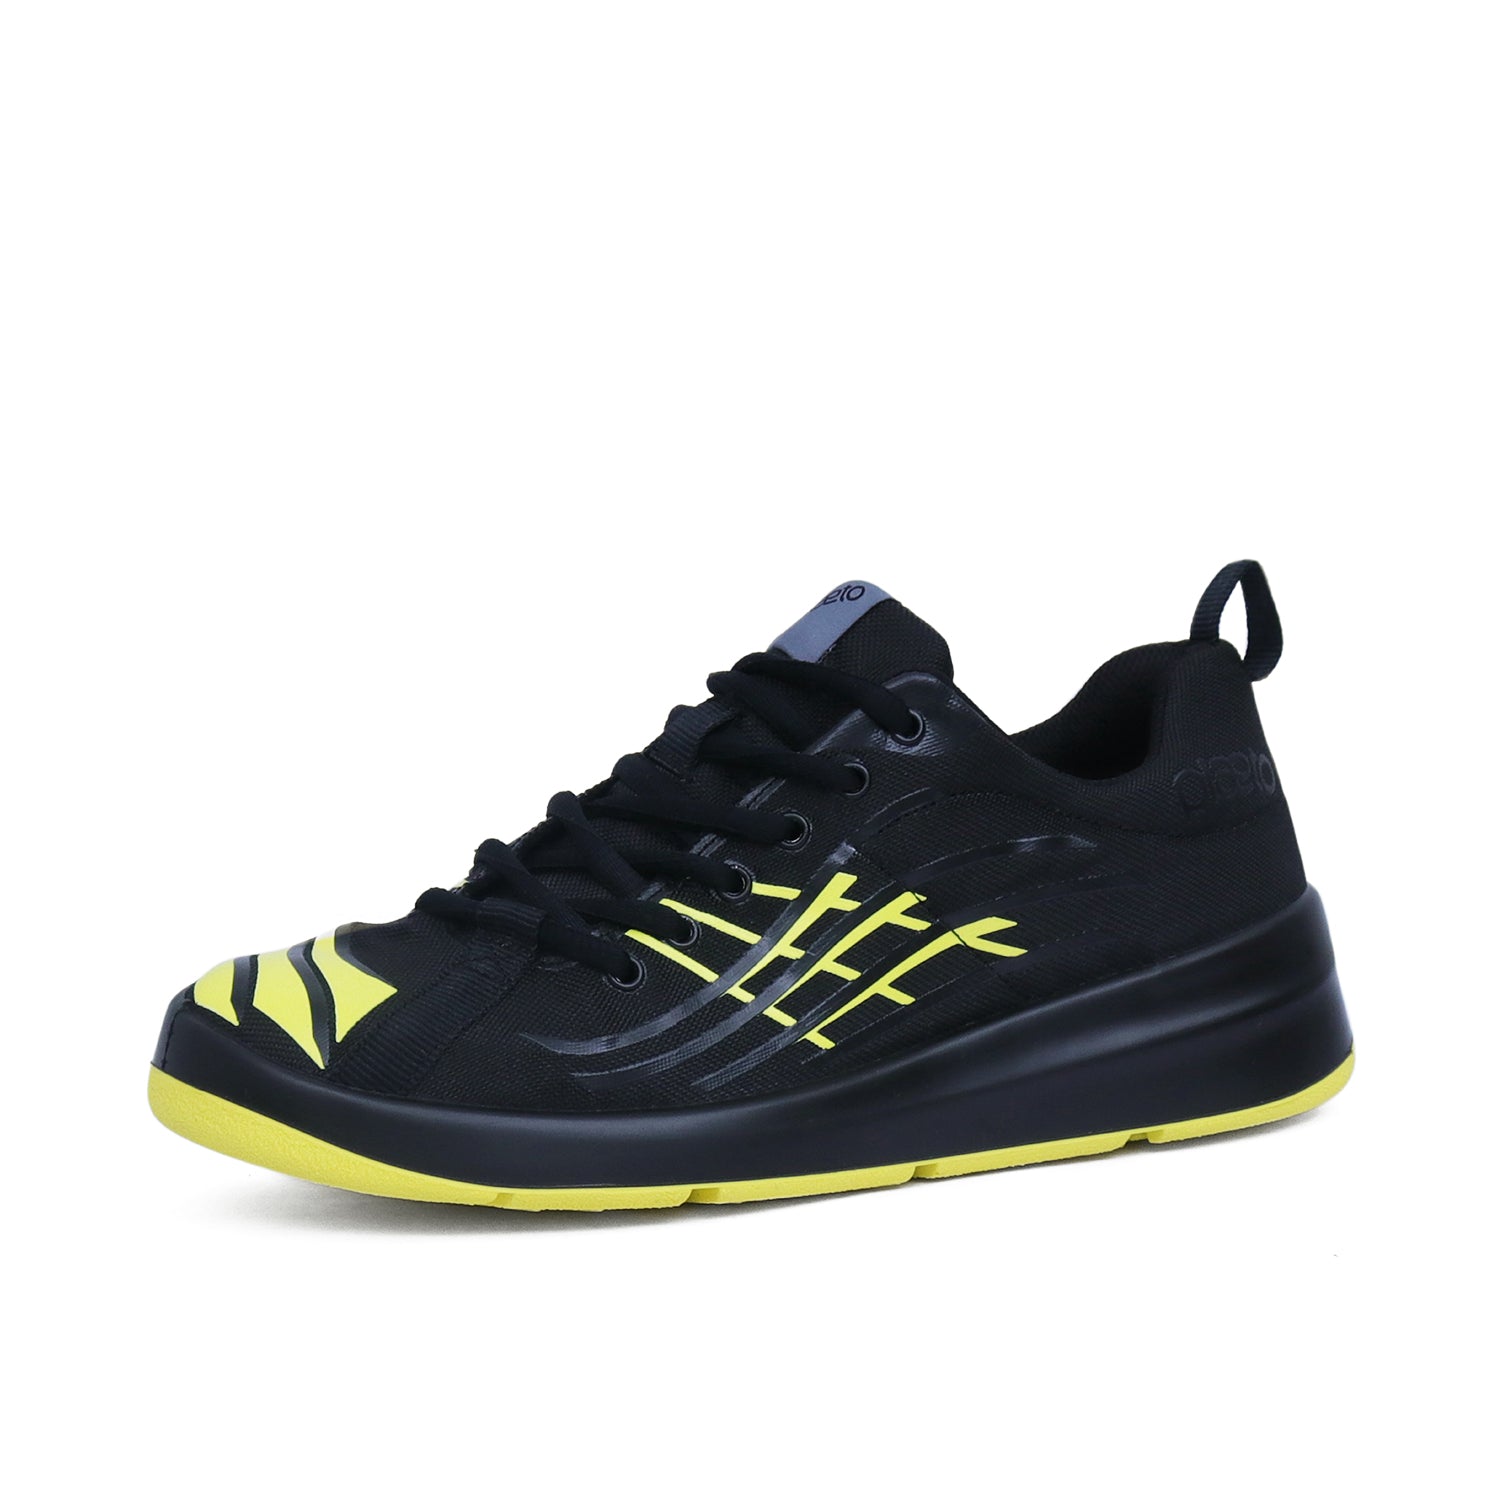 Nova Men's Sports Shoes - Black / Yellow